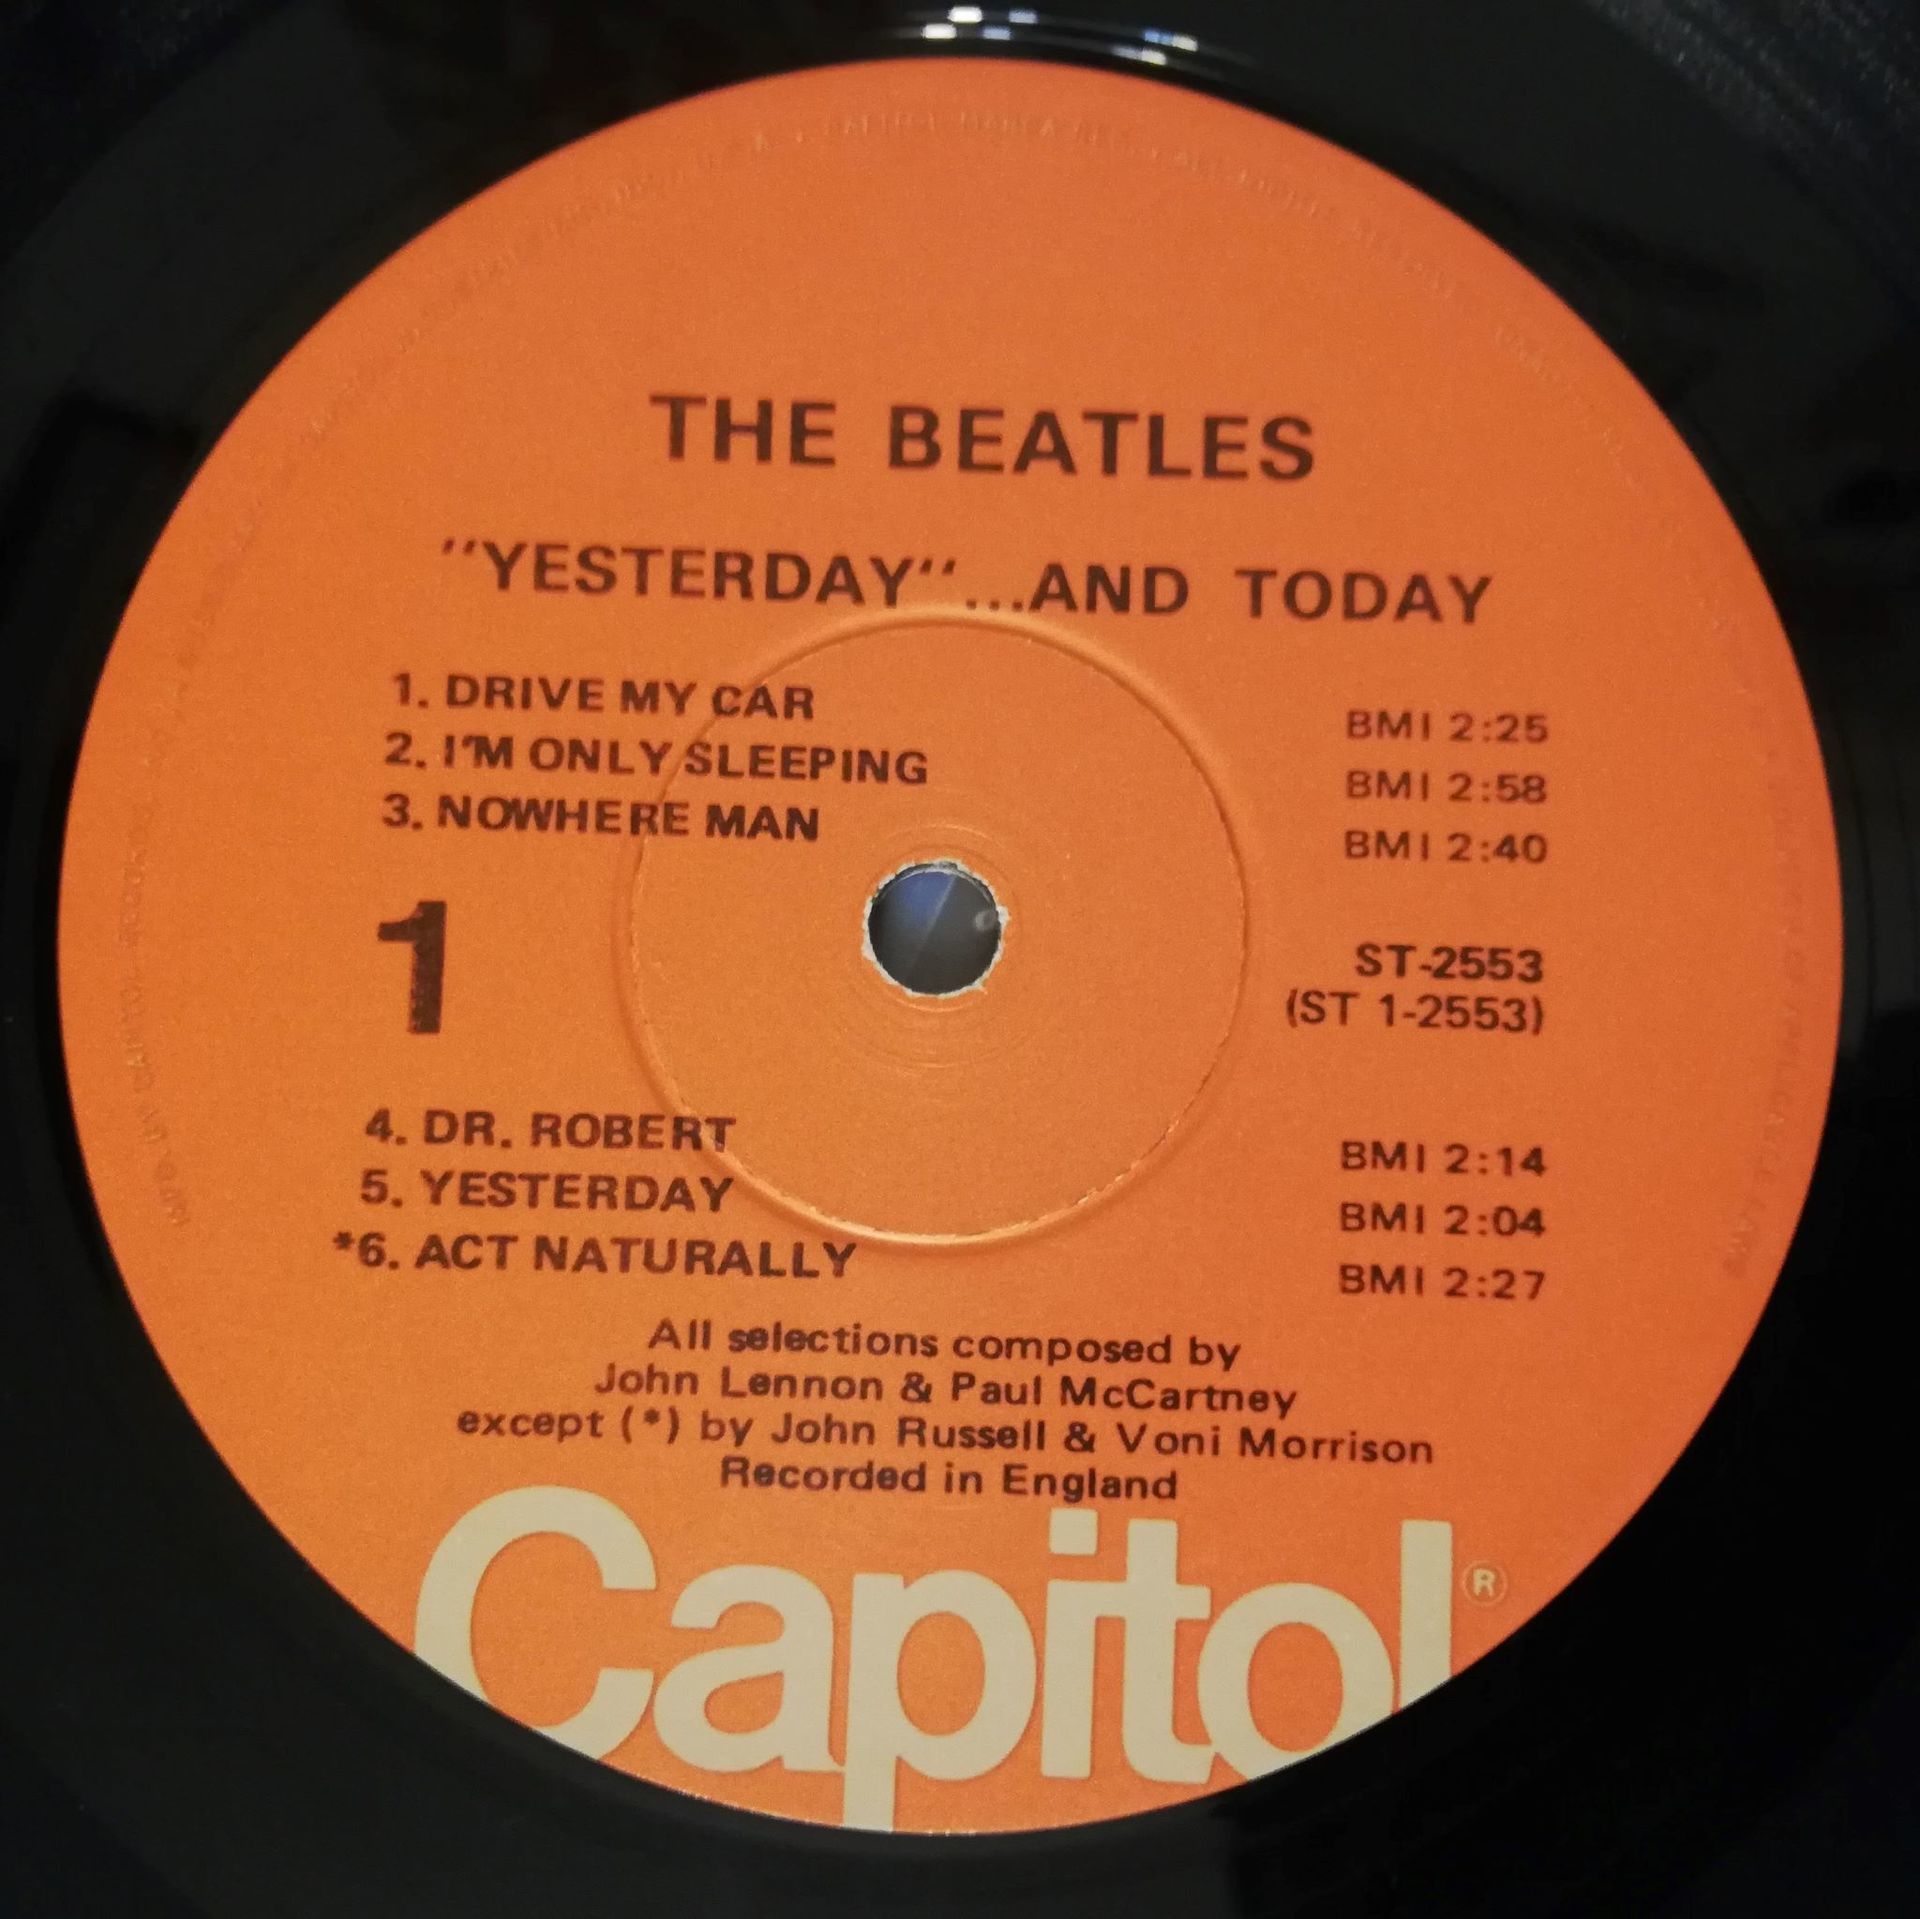 The Beatles「Yesterday and Today」米国盤LPを買った: 宇宙でひとりぼっち